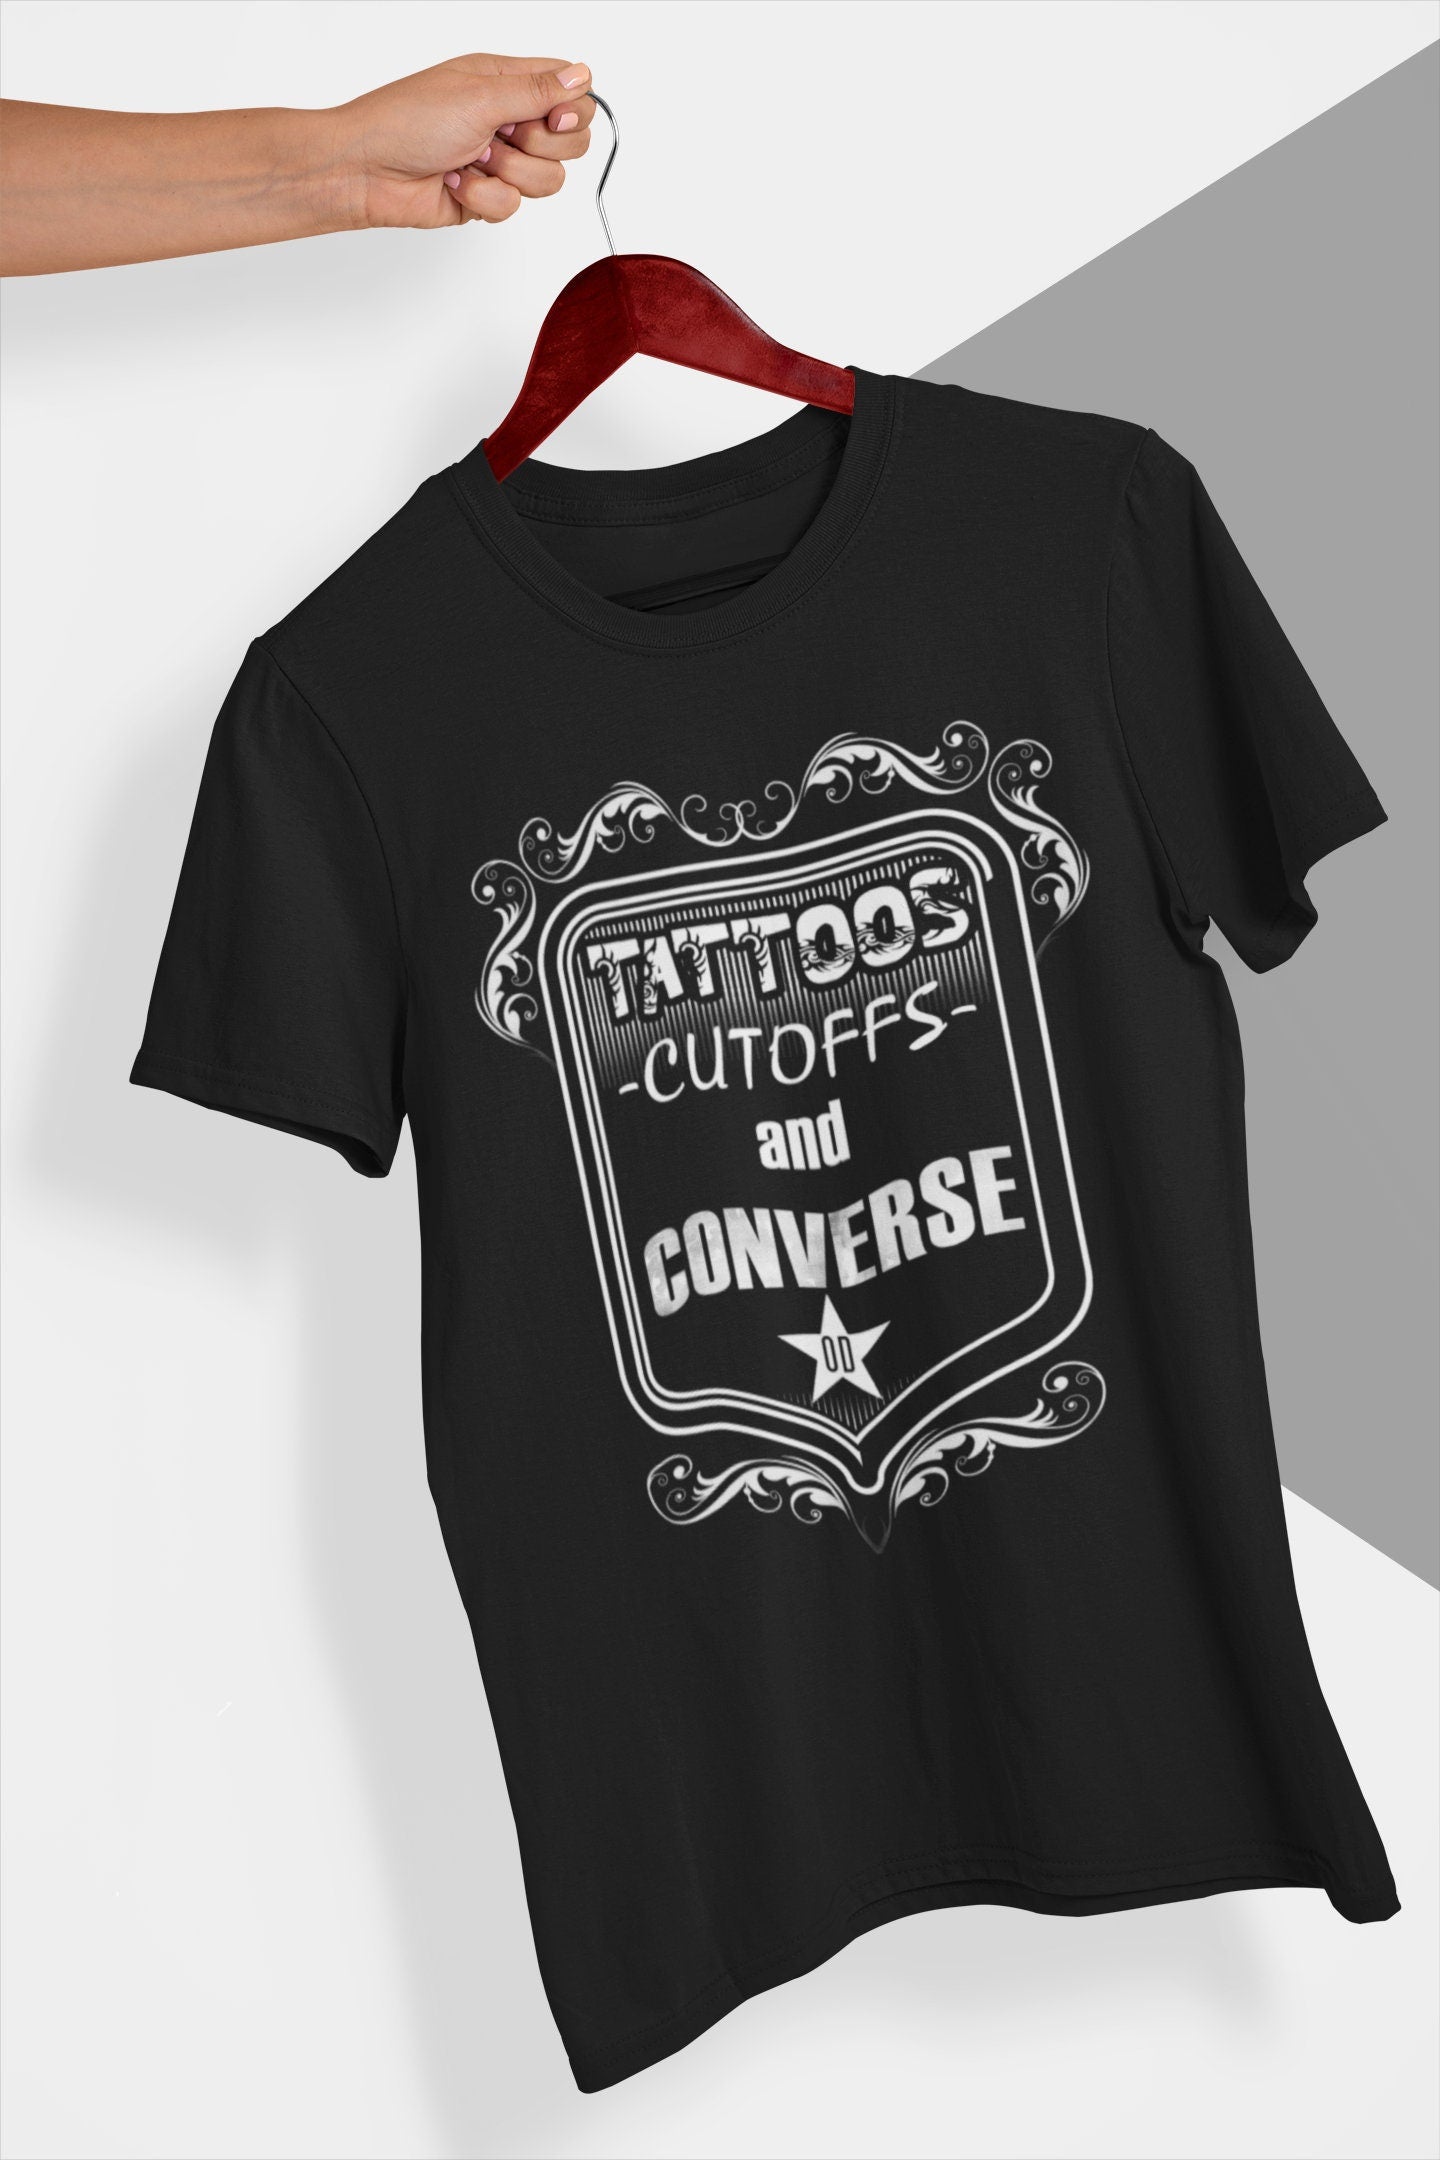 Old Dominion Lyric graphic T shirt Tattoos cutoffs and converse